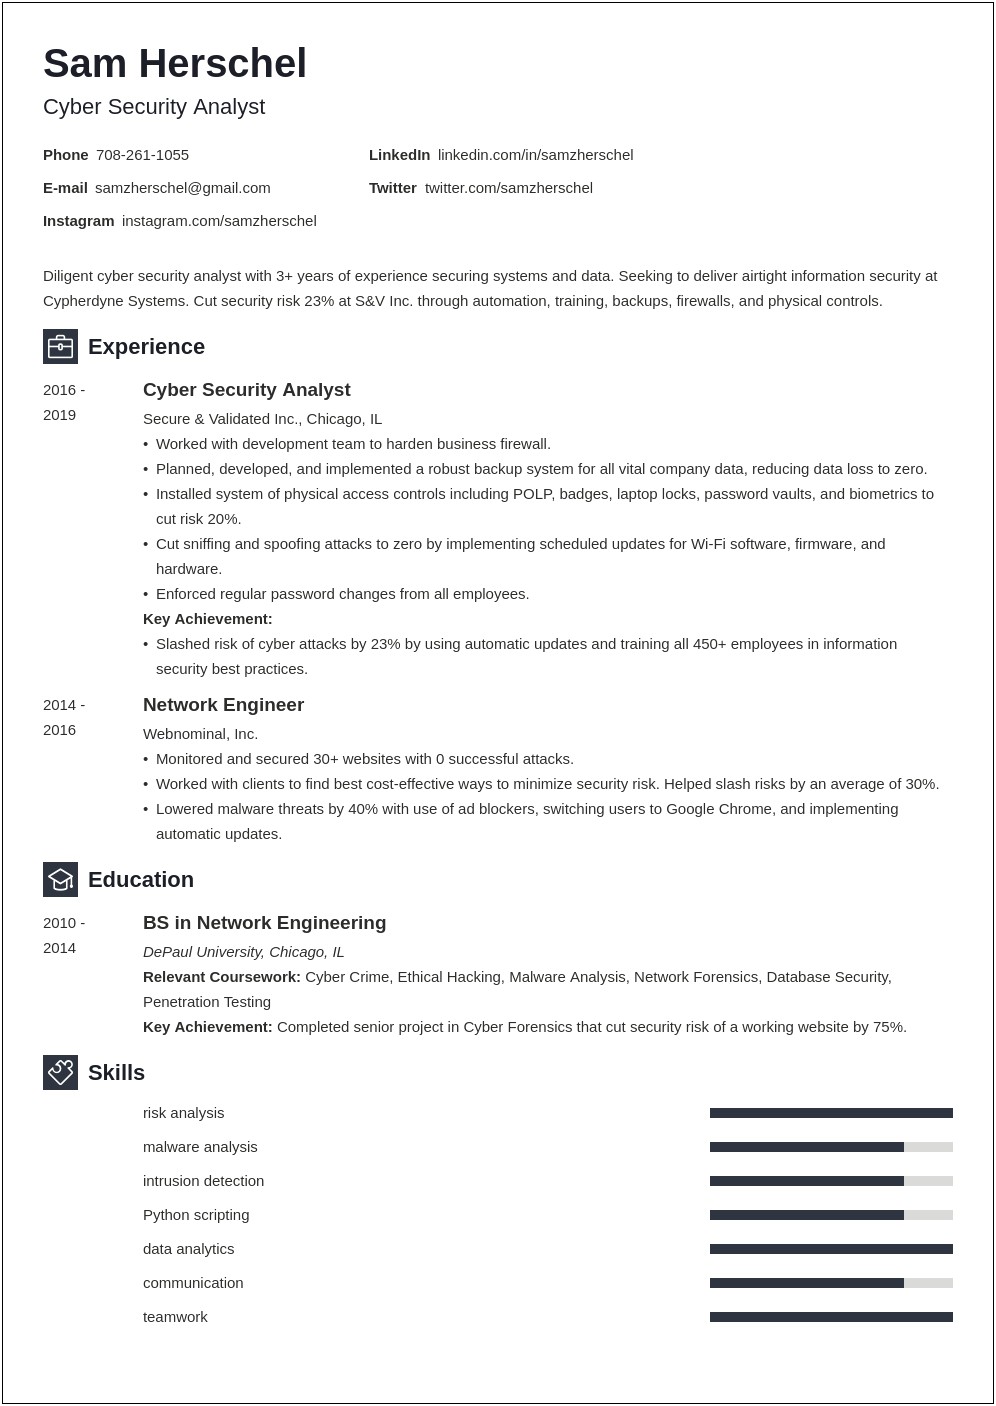 Manual Testing 1 Year Experience Sample Resume